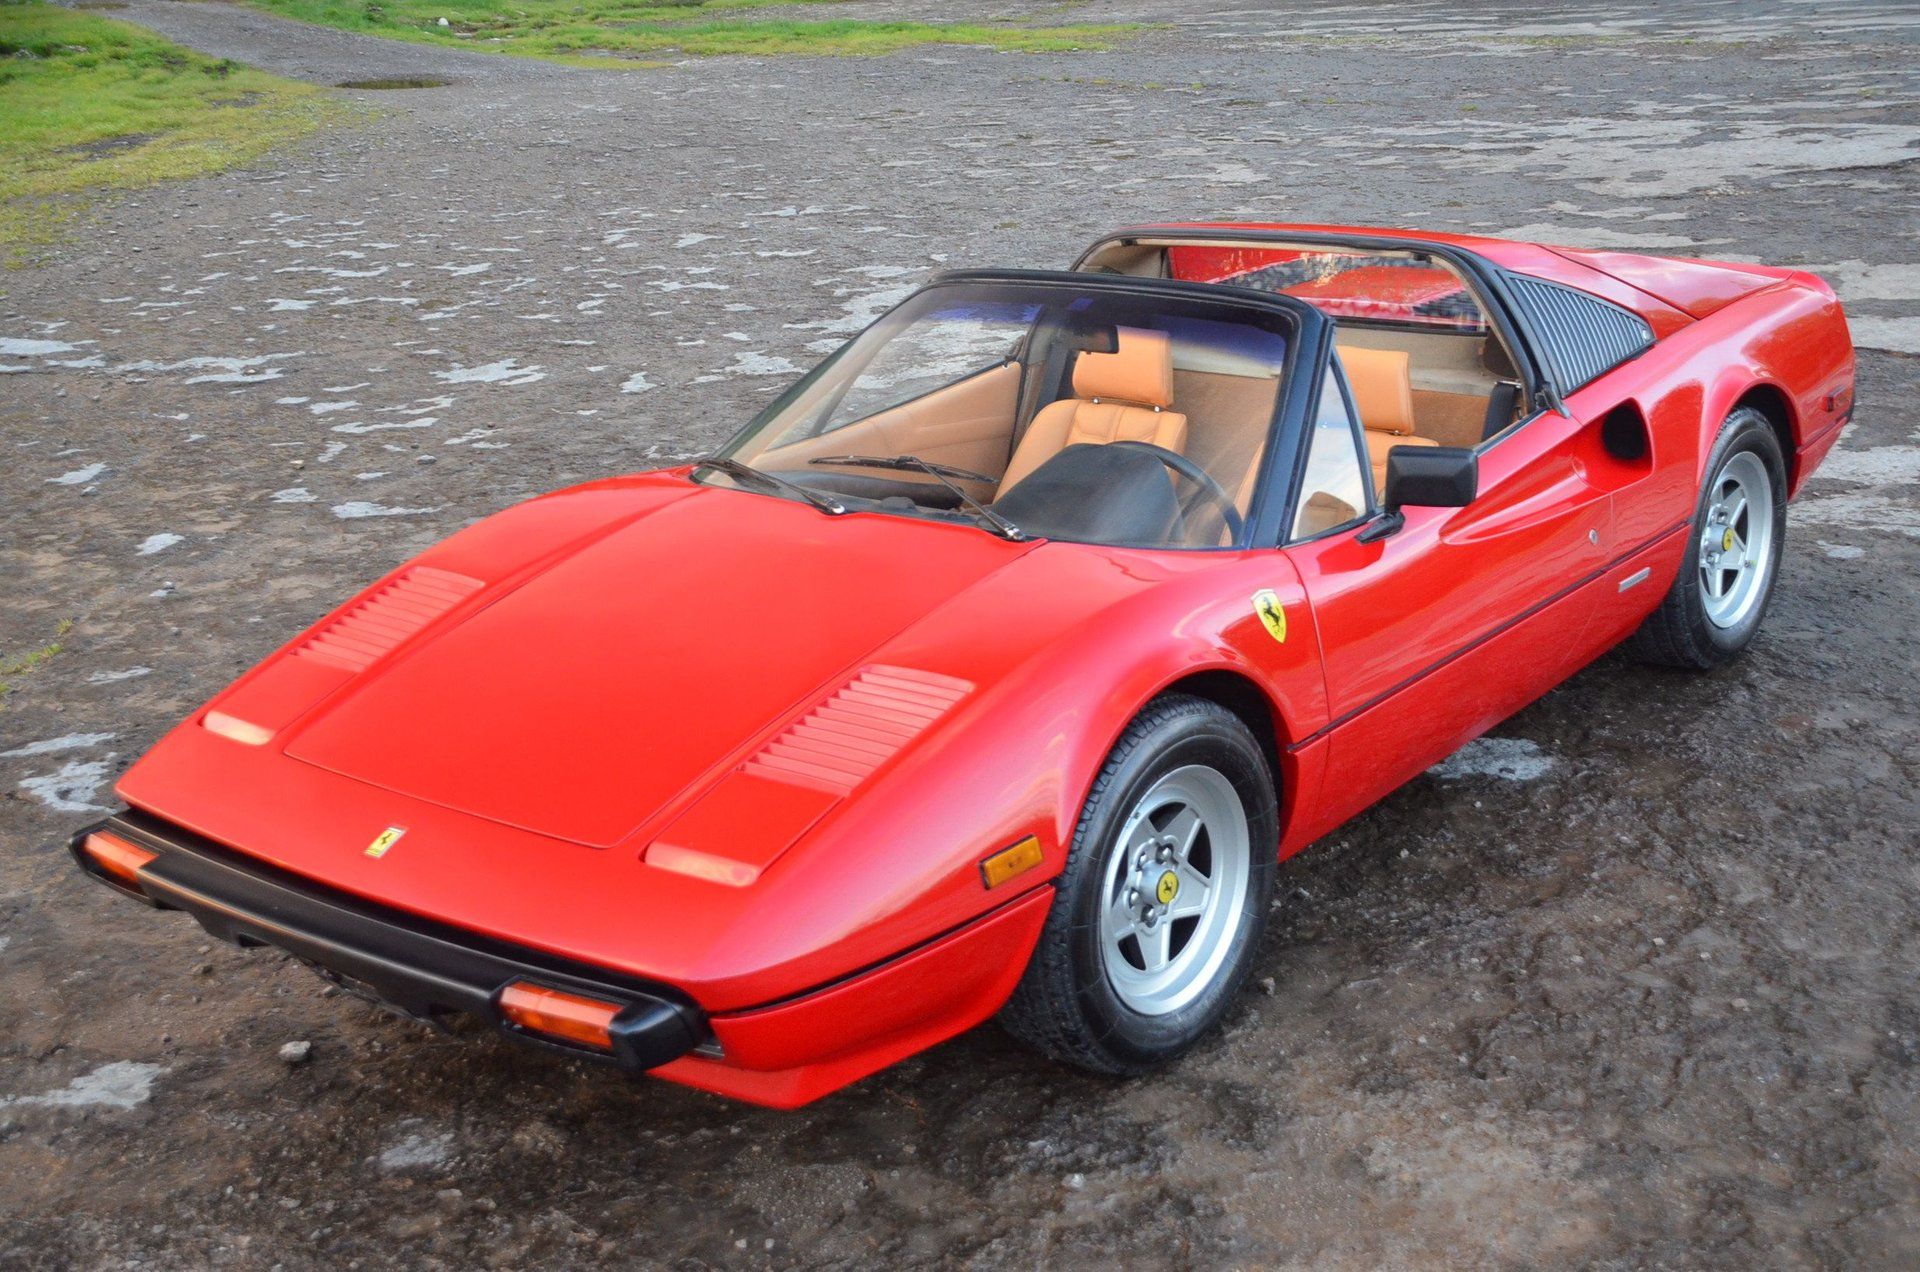 <img src="1982-ferrari-308-gtsi.jpg" alt="A 1982 Ferrari 308 GTSi">